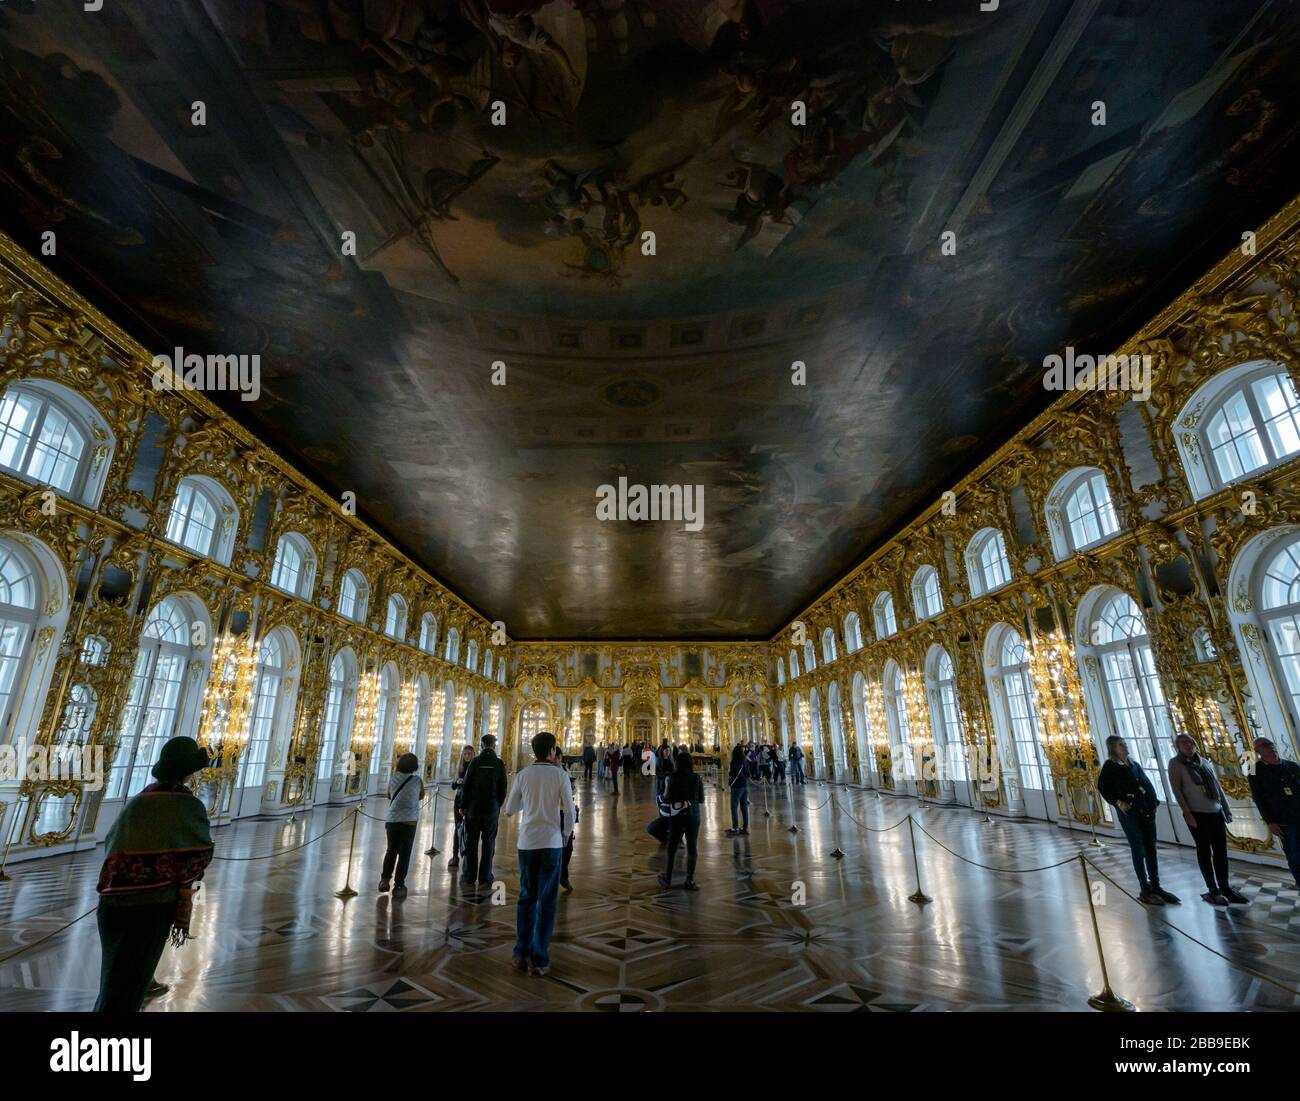 Ballroom with ceiling painting at Catherine Palace interior, Tsars Village, Tsarskoe Selo, Pushkin, Russian Federation Stock Photo